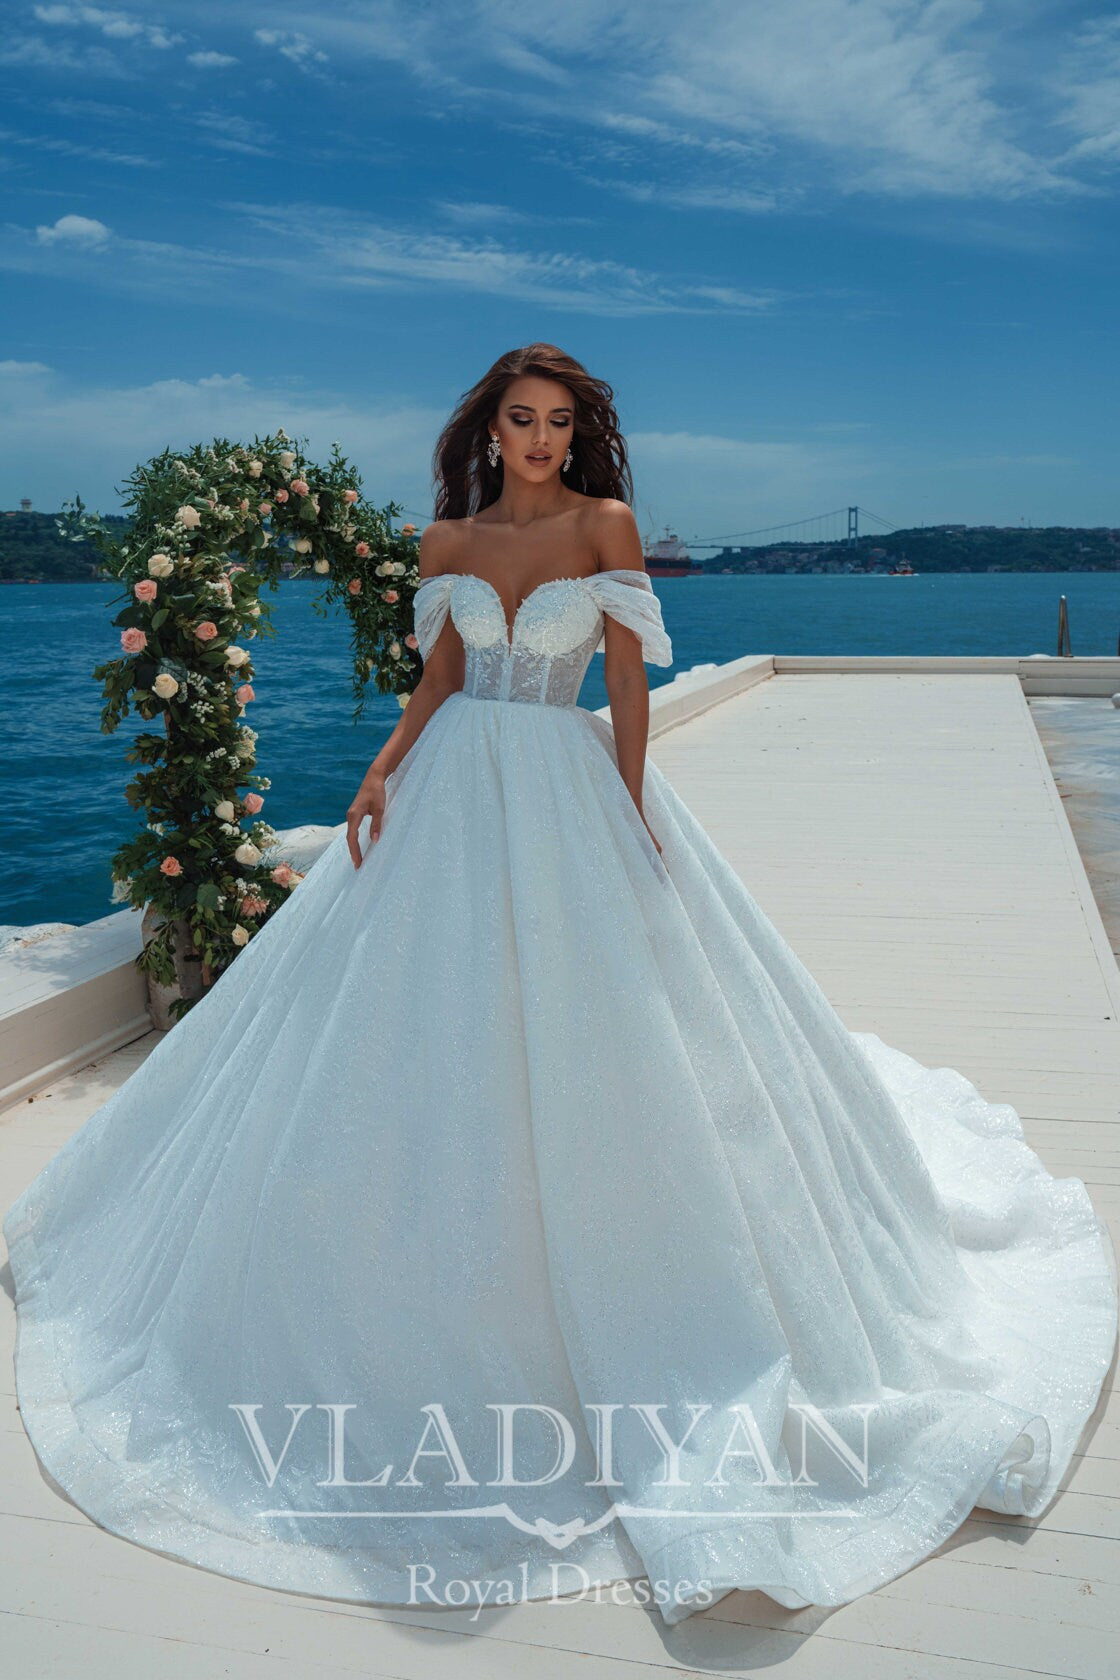 Luxury Princess Queen Off the Shoulder Busiter Corset Top Wedding Dress Bridal Gown Open Back Bare Shoulder Sparkle